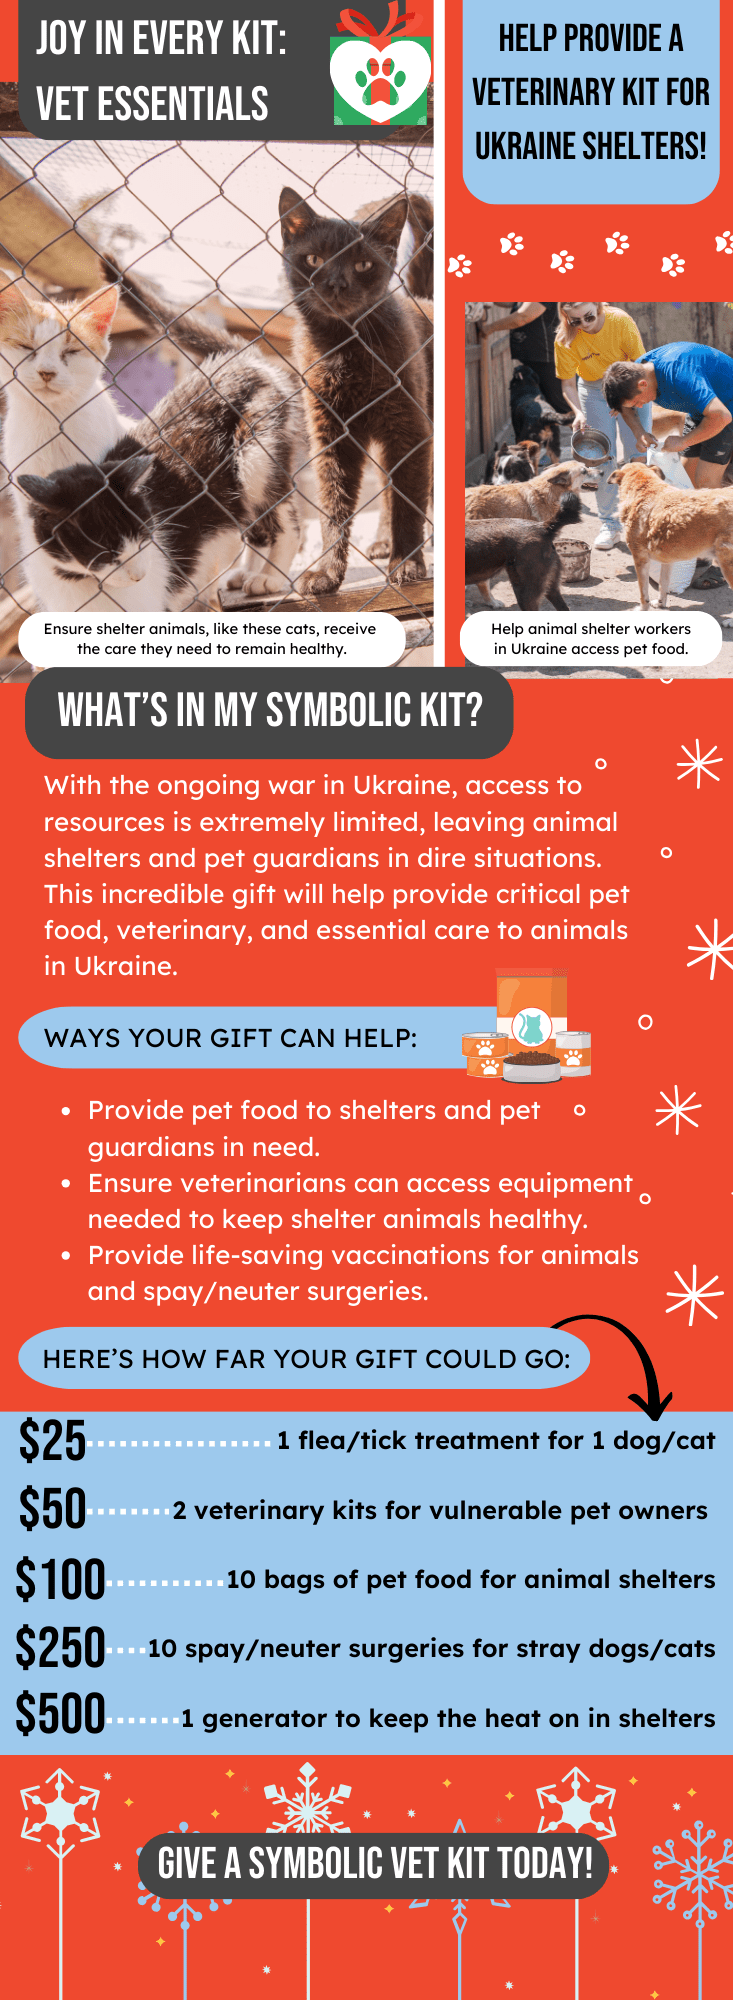 Joy in Every Kit - vet essentials holiday giving - ukraine